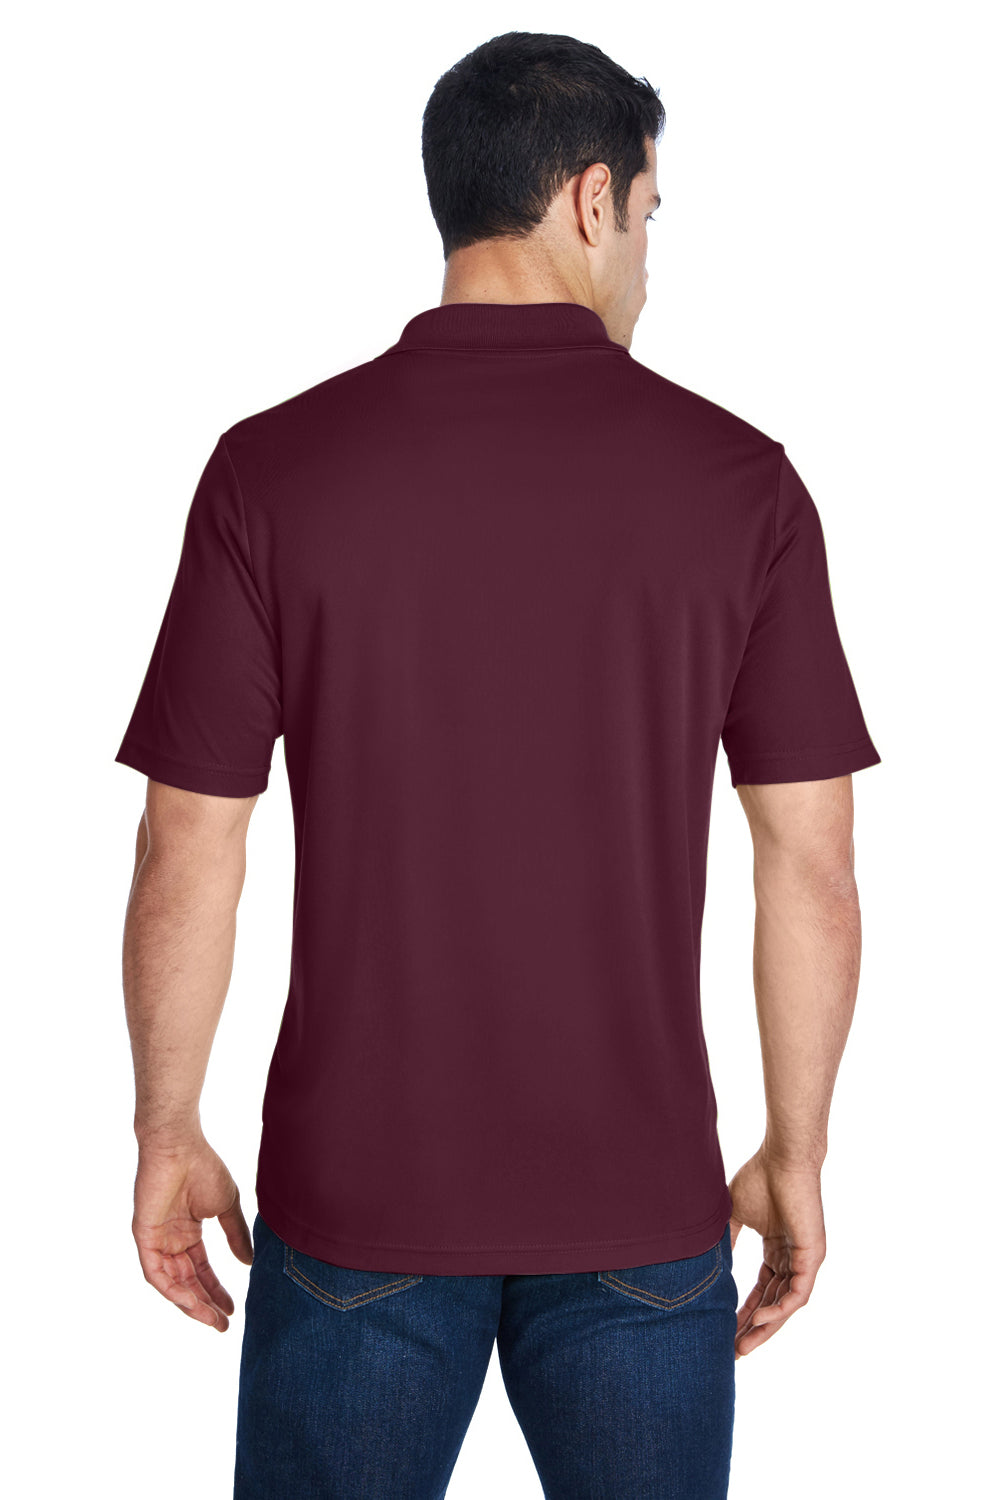 Core 365 88181 Mens Origin Performance Moisture Wicking Short Sleeve Polo Shirt Burgundy Back